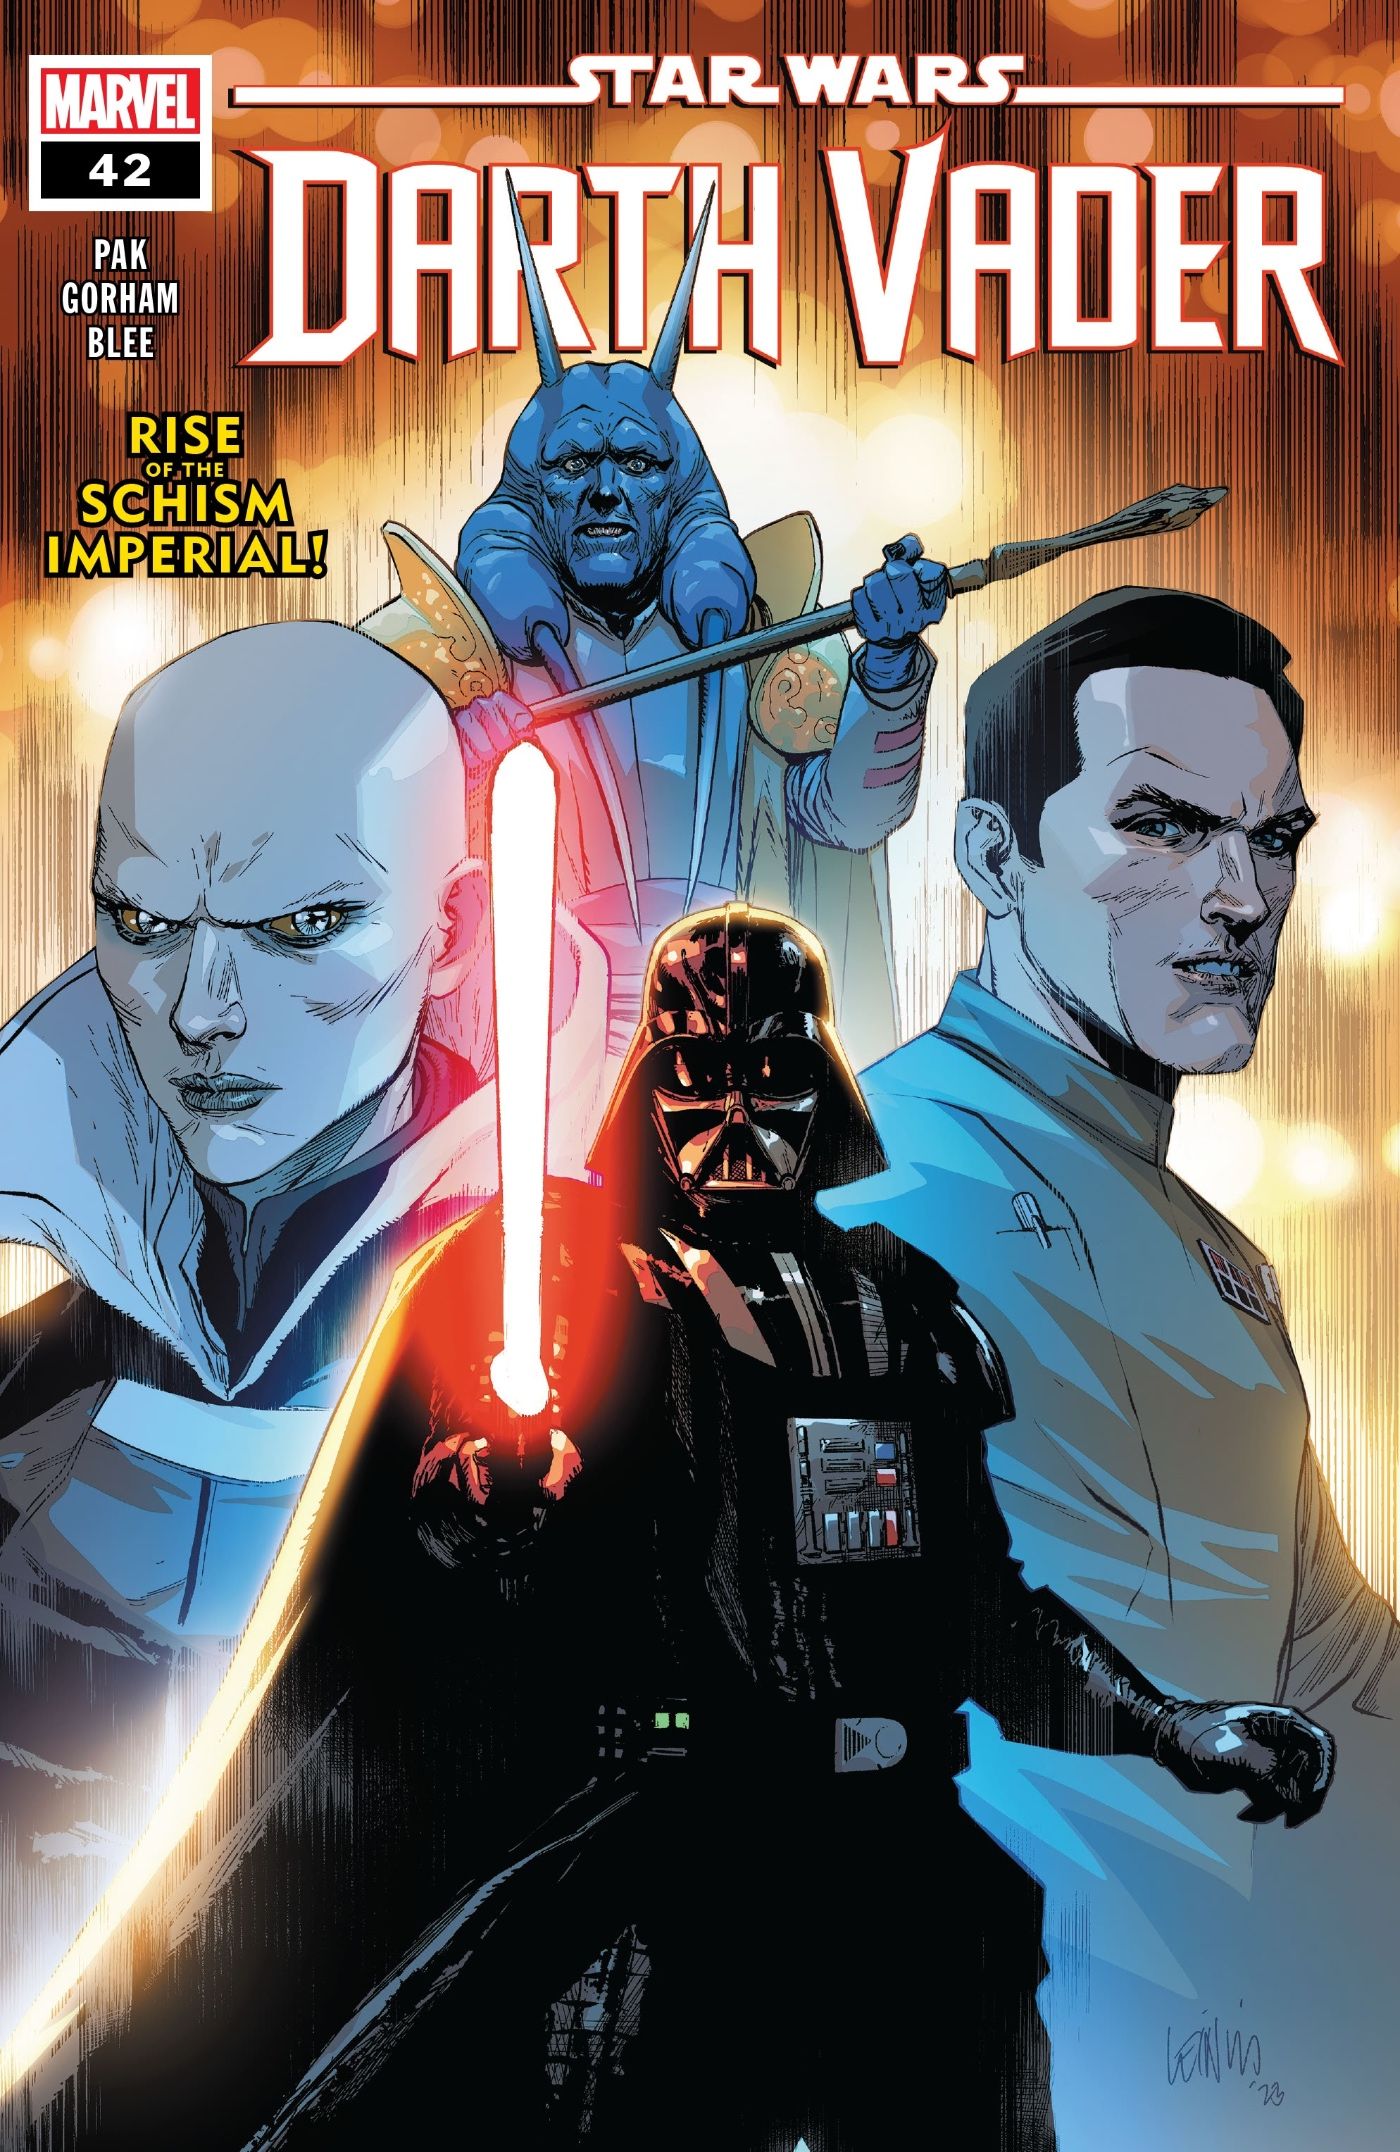 Darth Vader #42 Cover Art